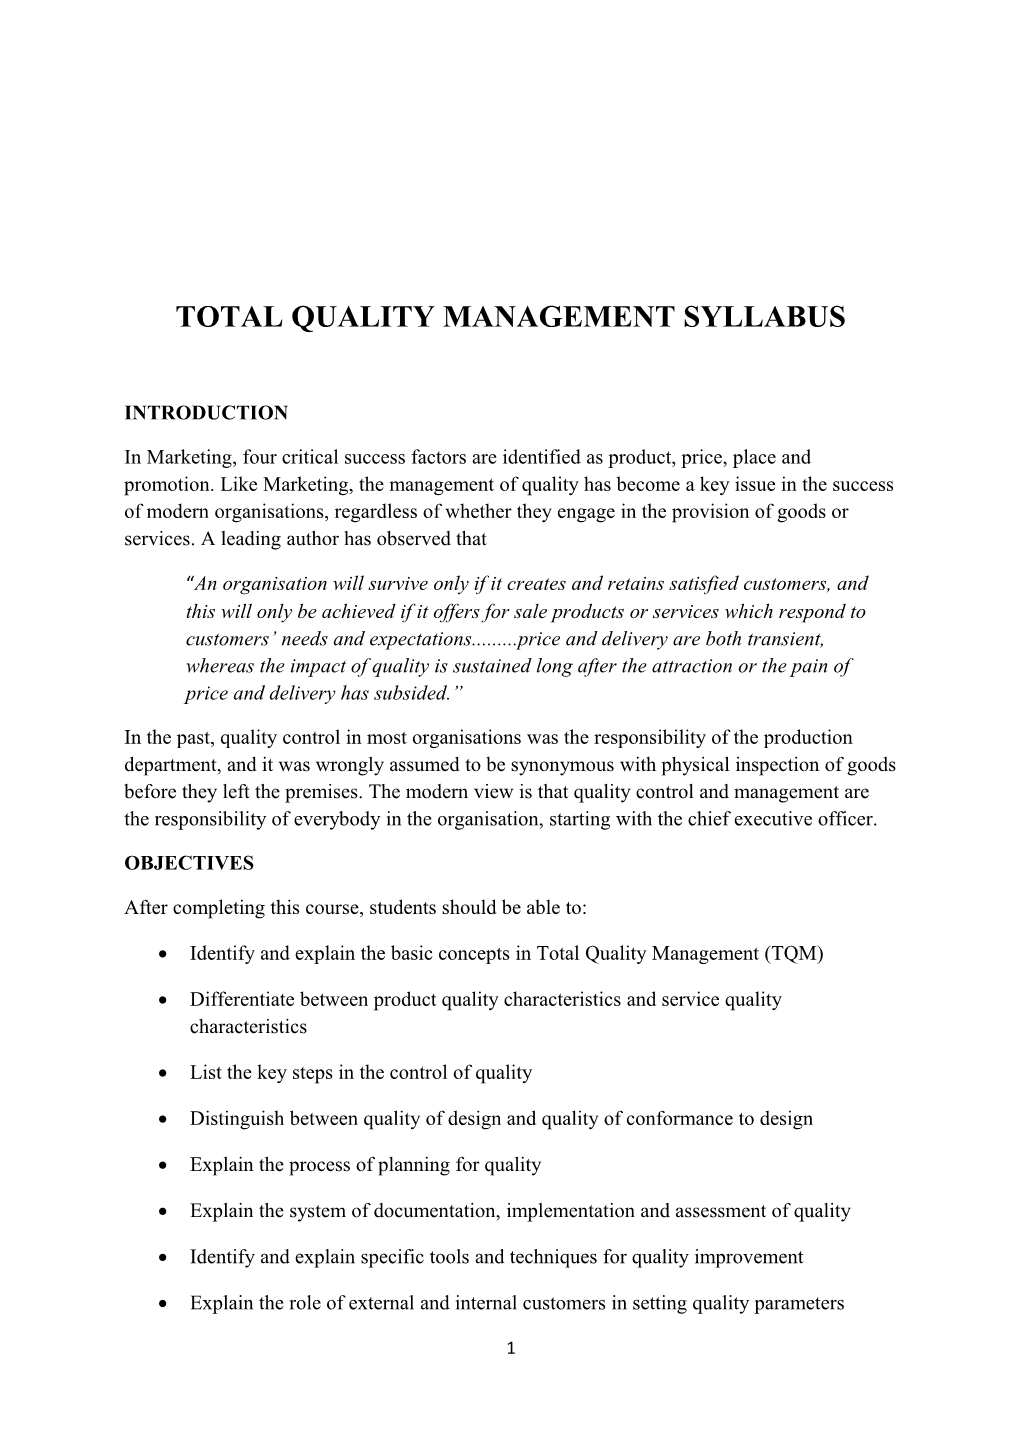 Total Quality Management Syllabus